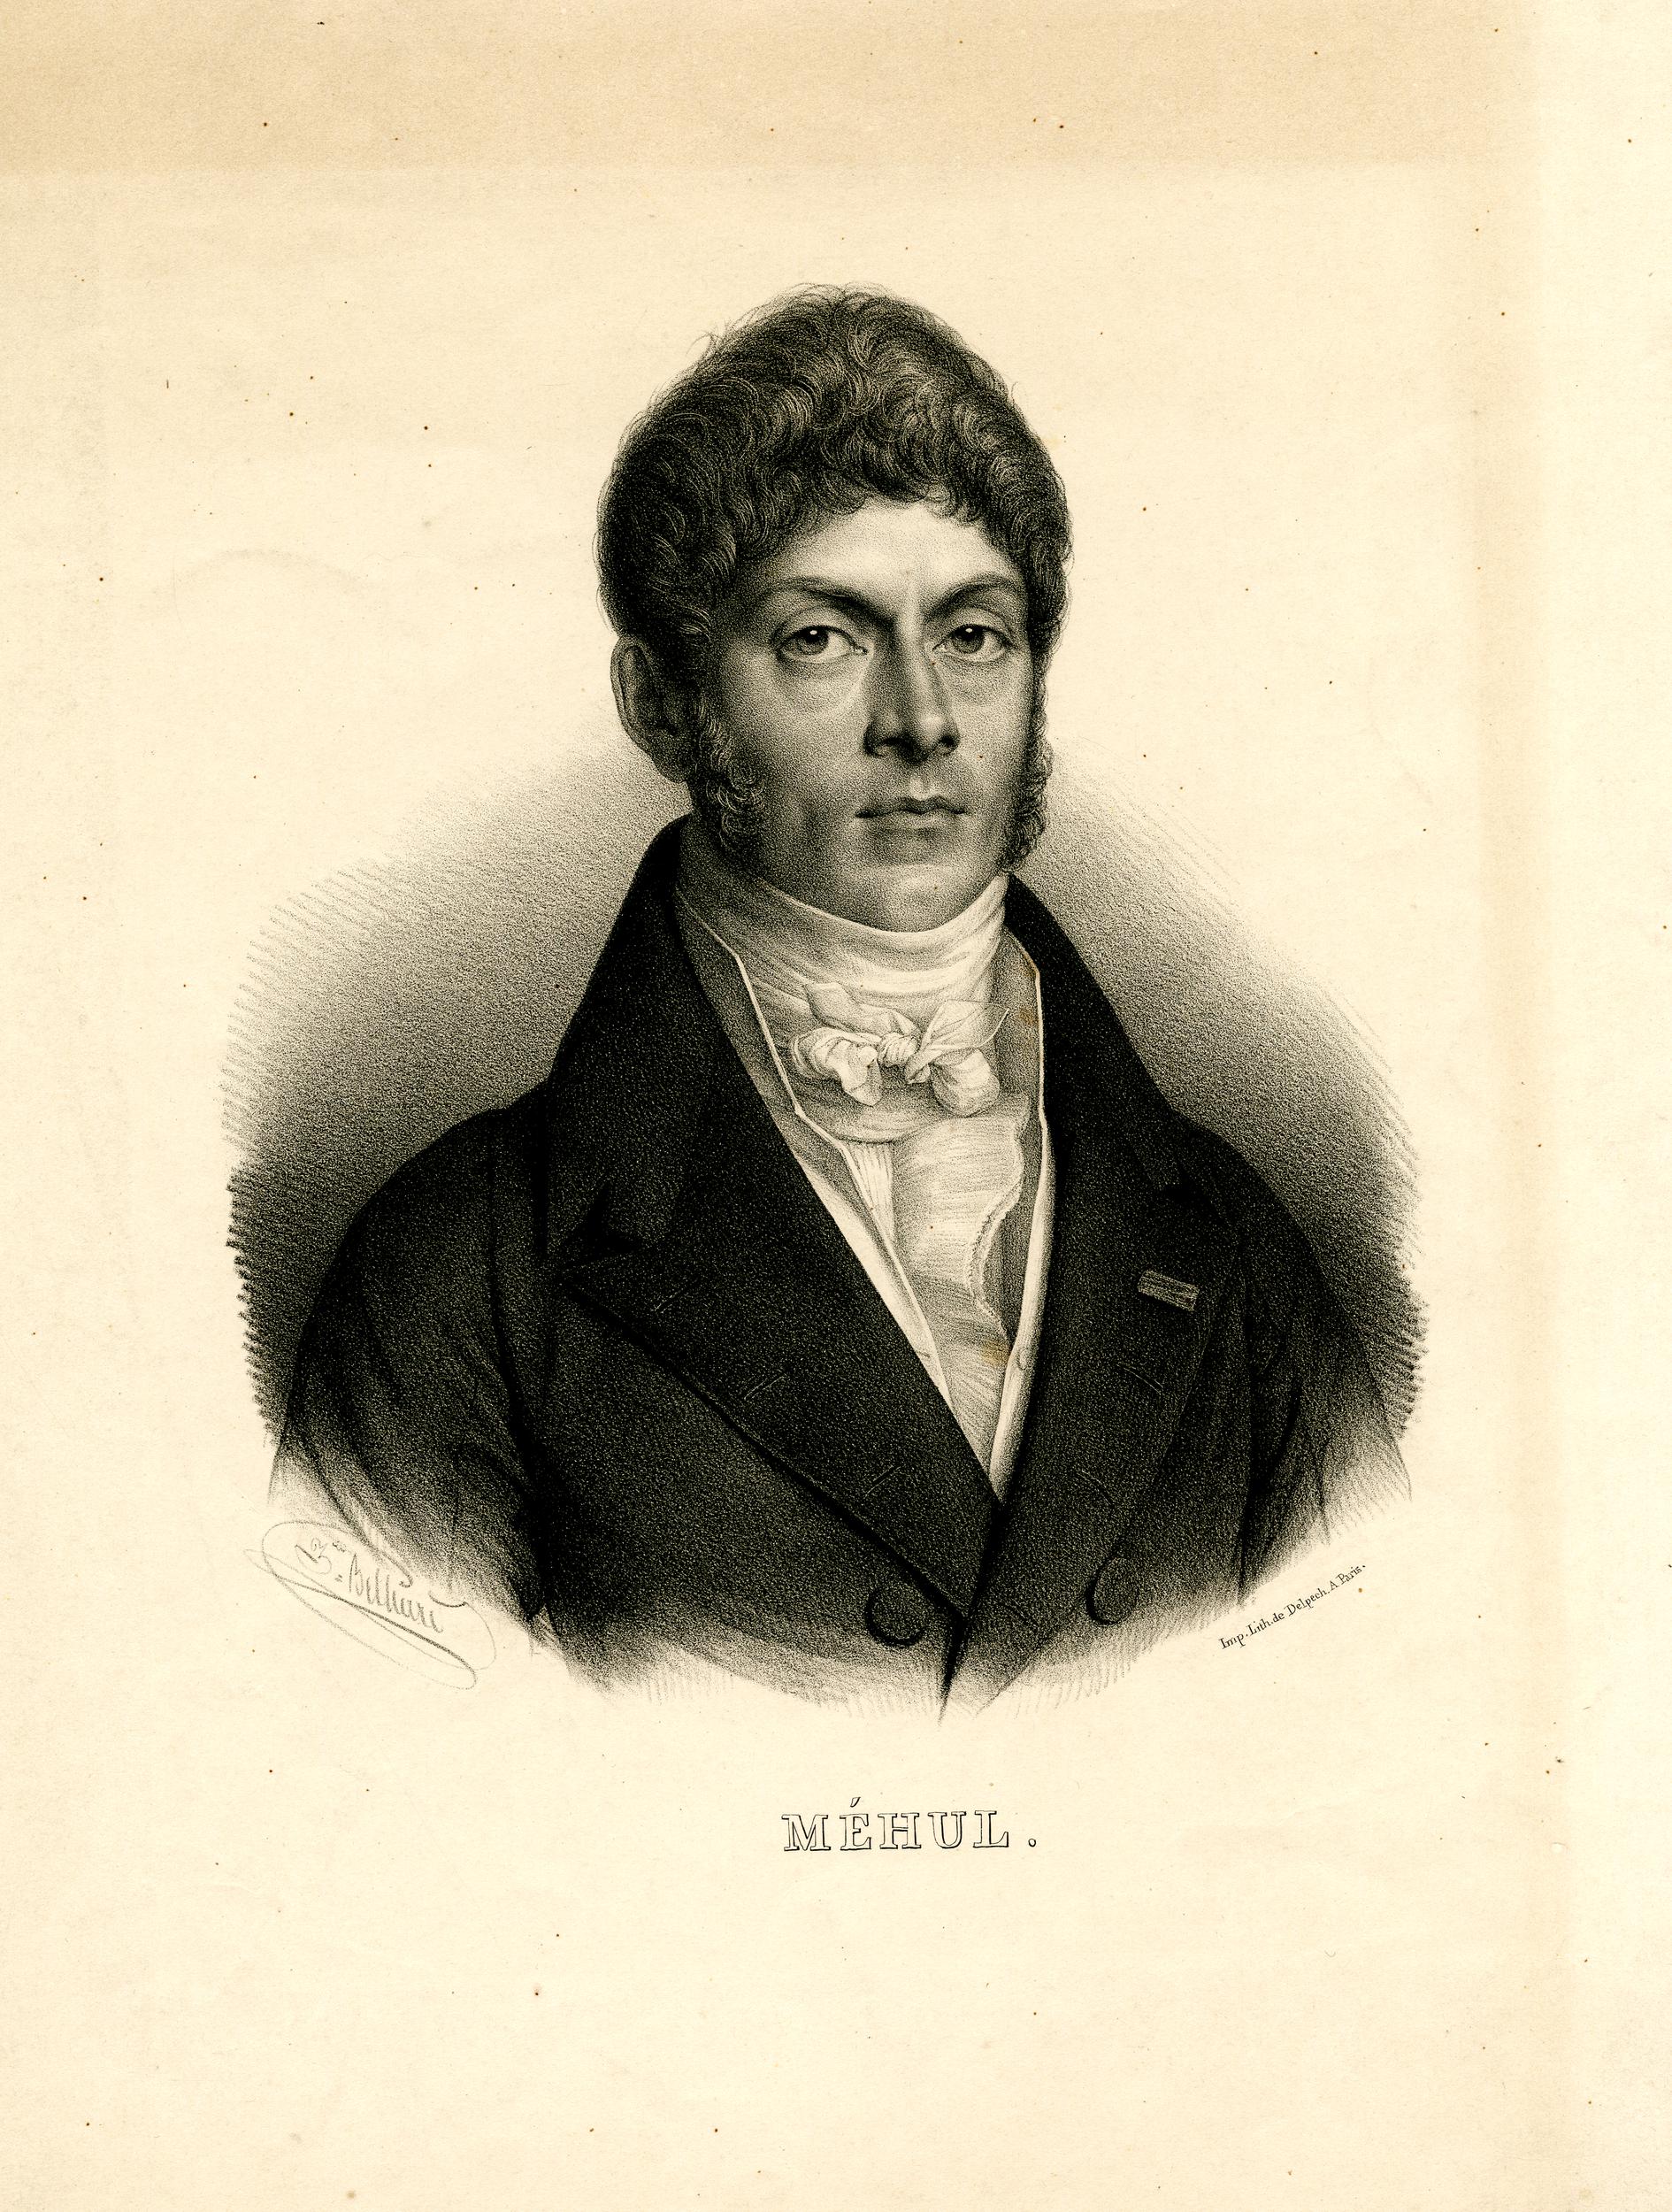 Étienne MÉHUL, lithographie, 1837, collection British Museum